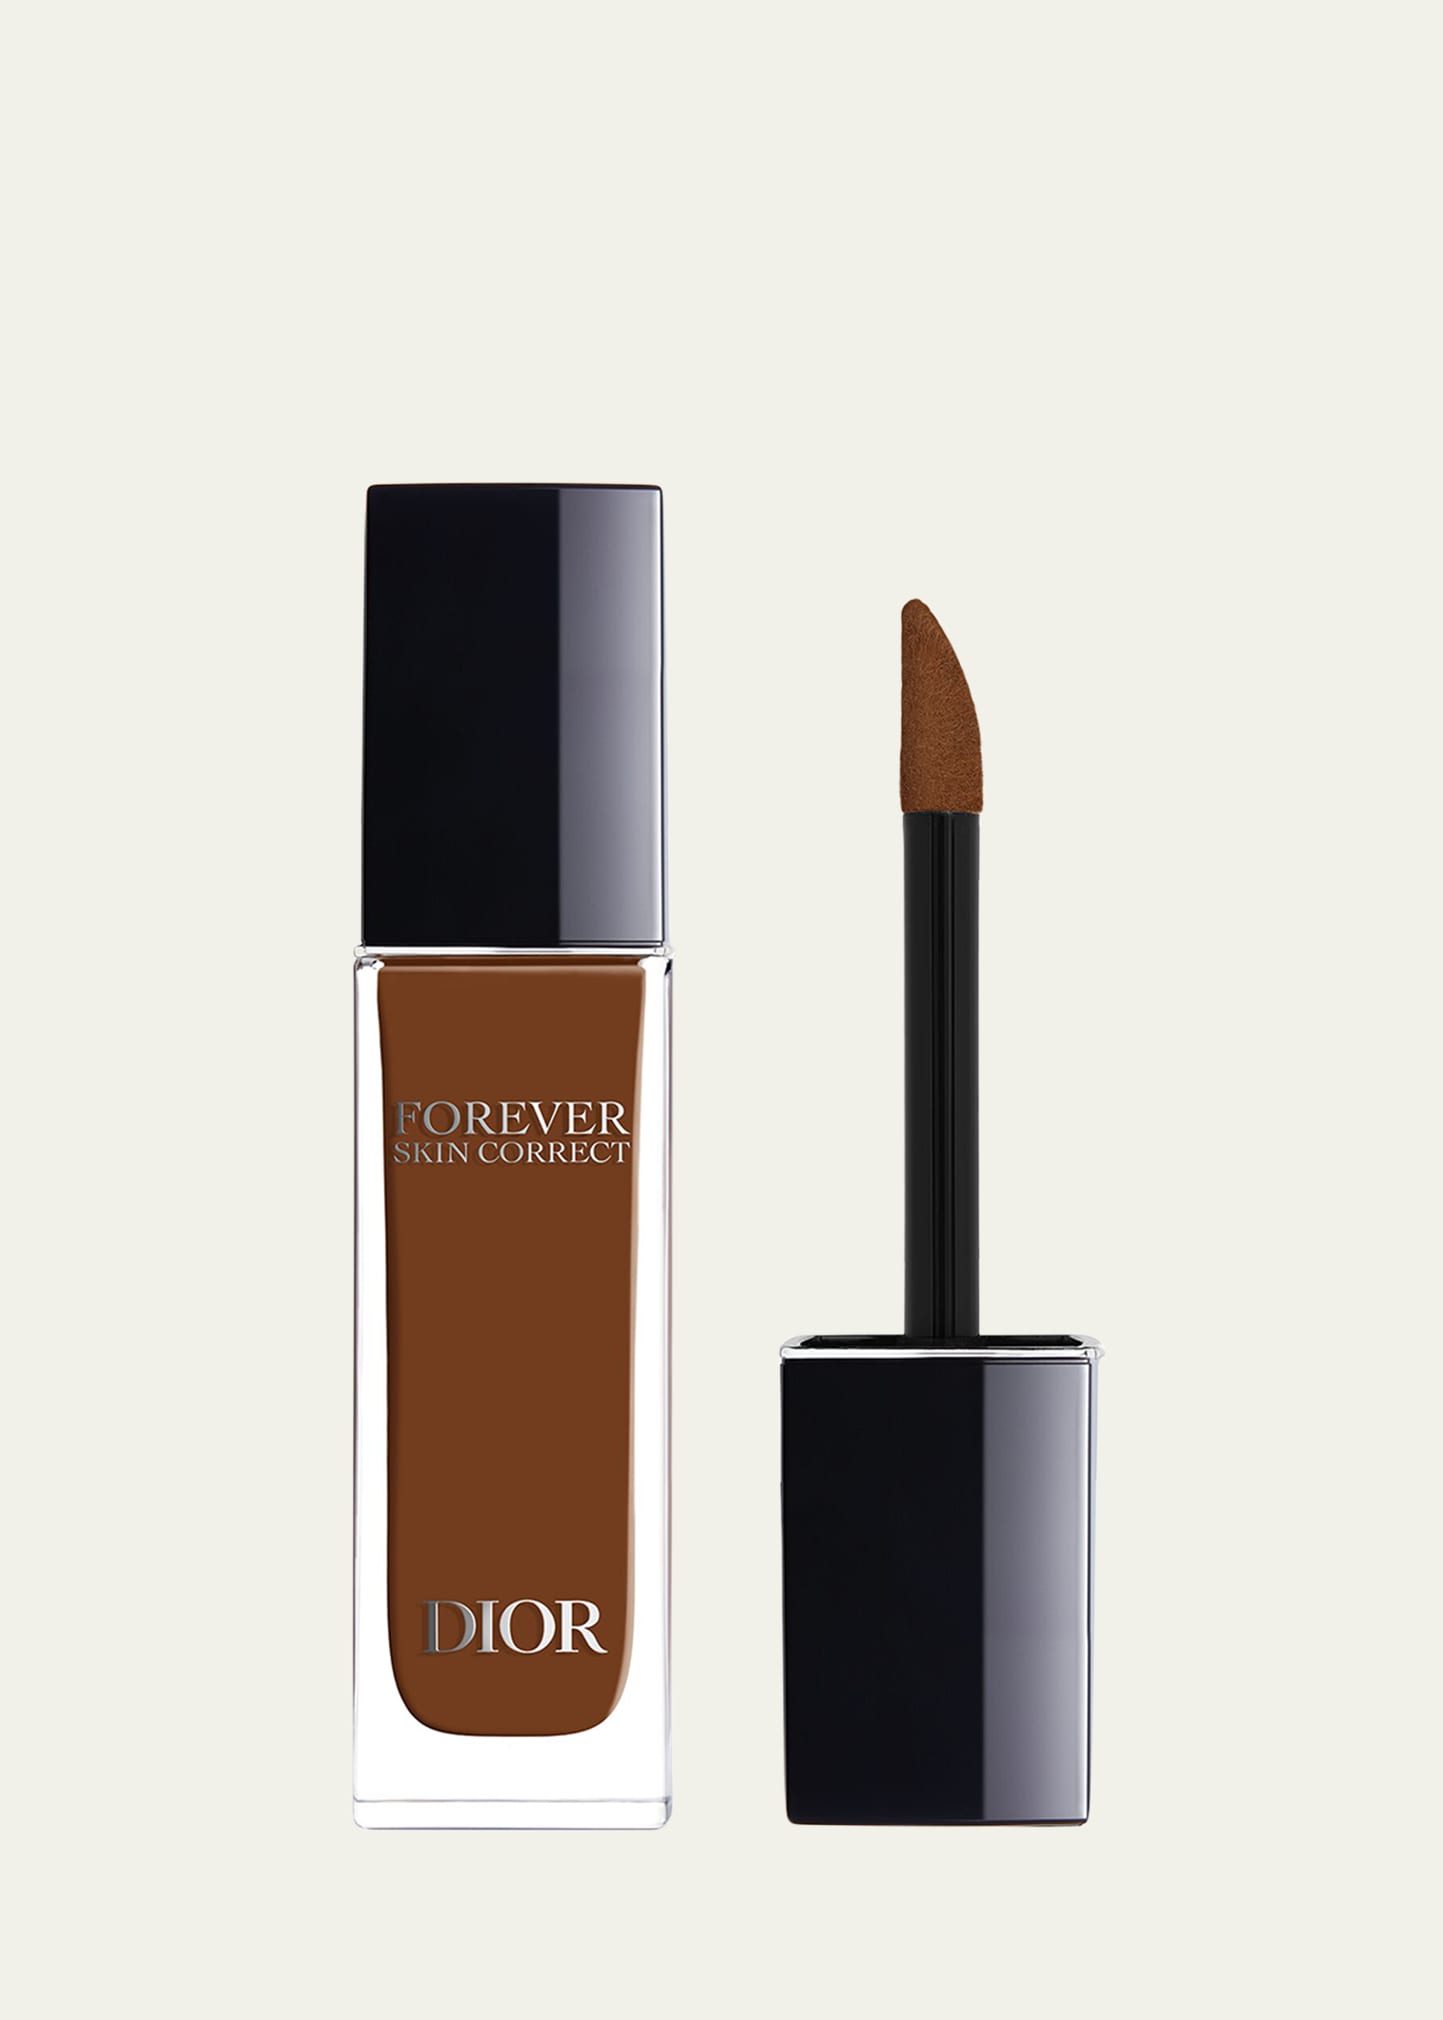 Dior Forever Skin Correct Full-coverage Concealer In 9 N Neutral